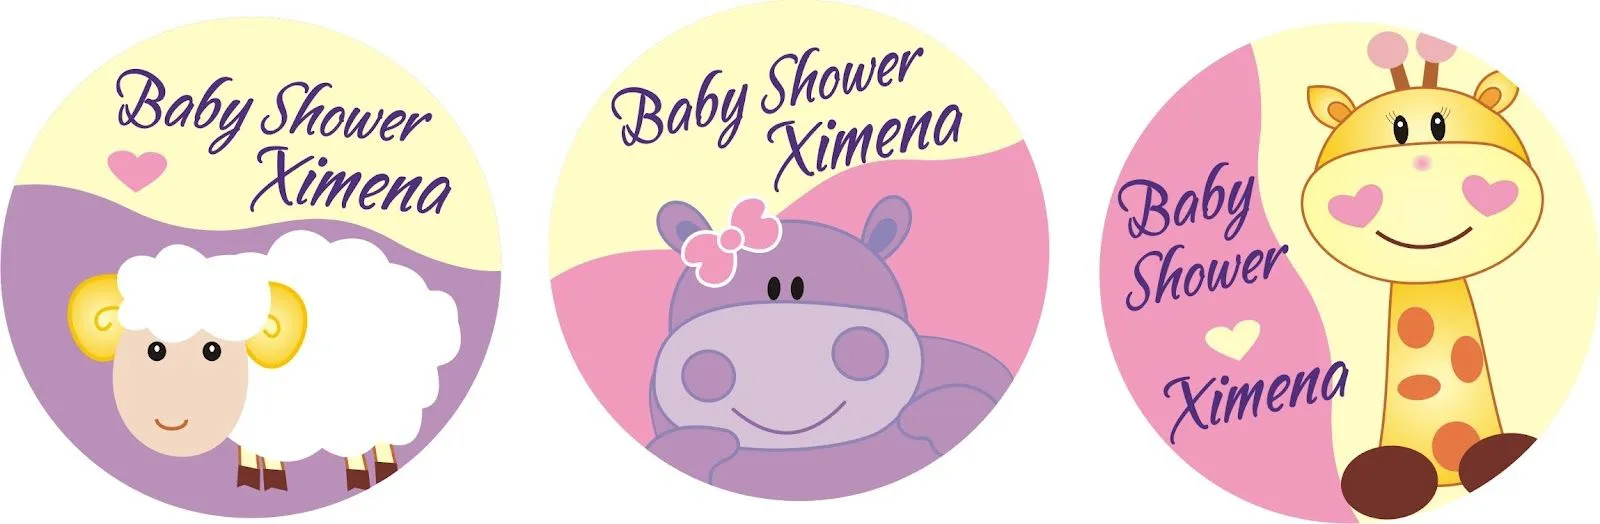 vgm: Baby Shower niña